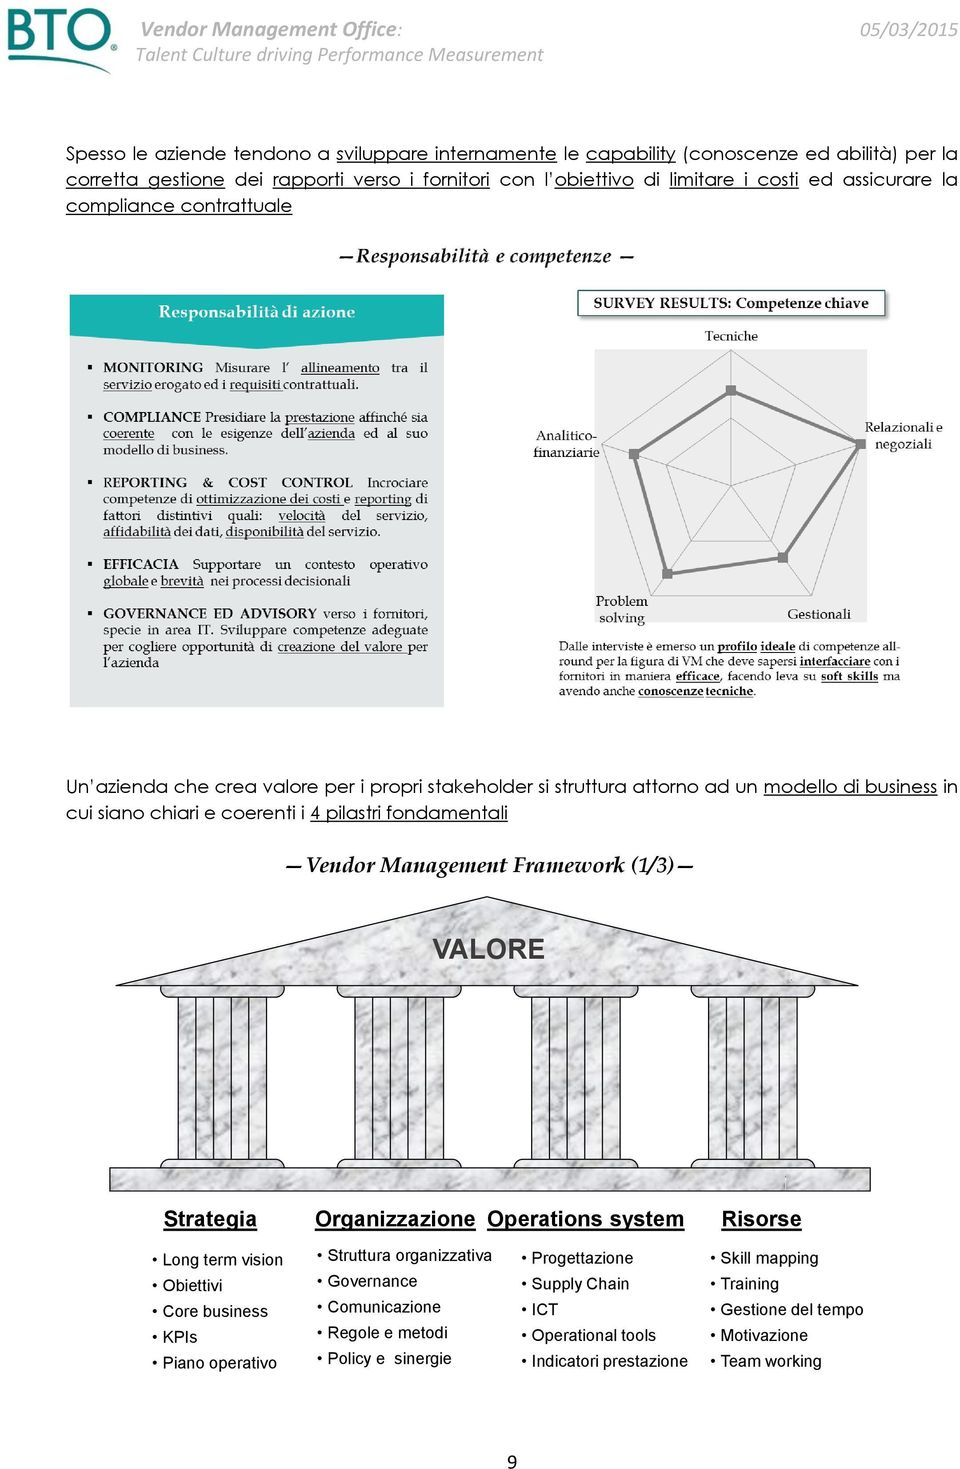 fondamentali Vendor Management Framework (1/3) VALORE Strategia Organizzazione Operations system Risorse Long term vision Obiettivi Core business KPIs Piano operativo Struttura